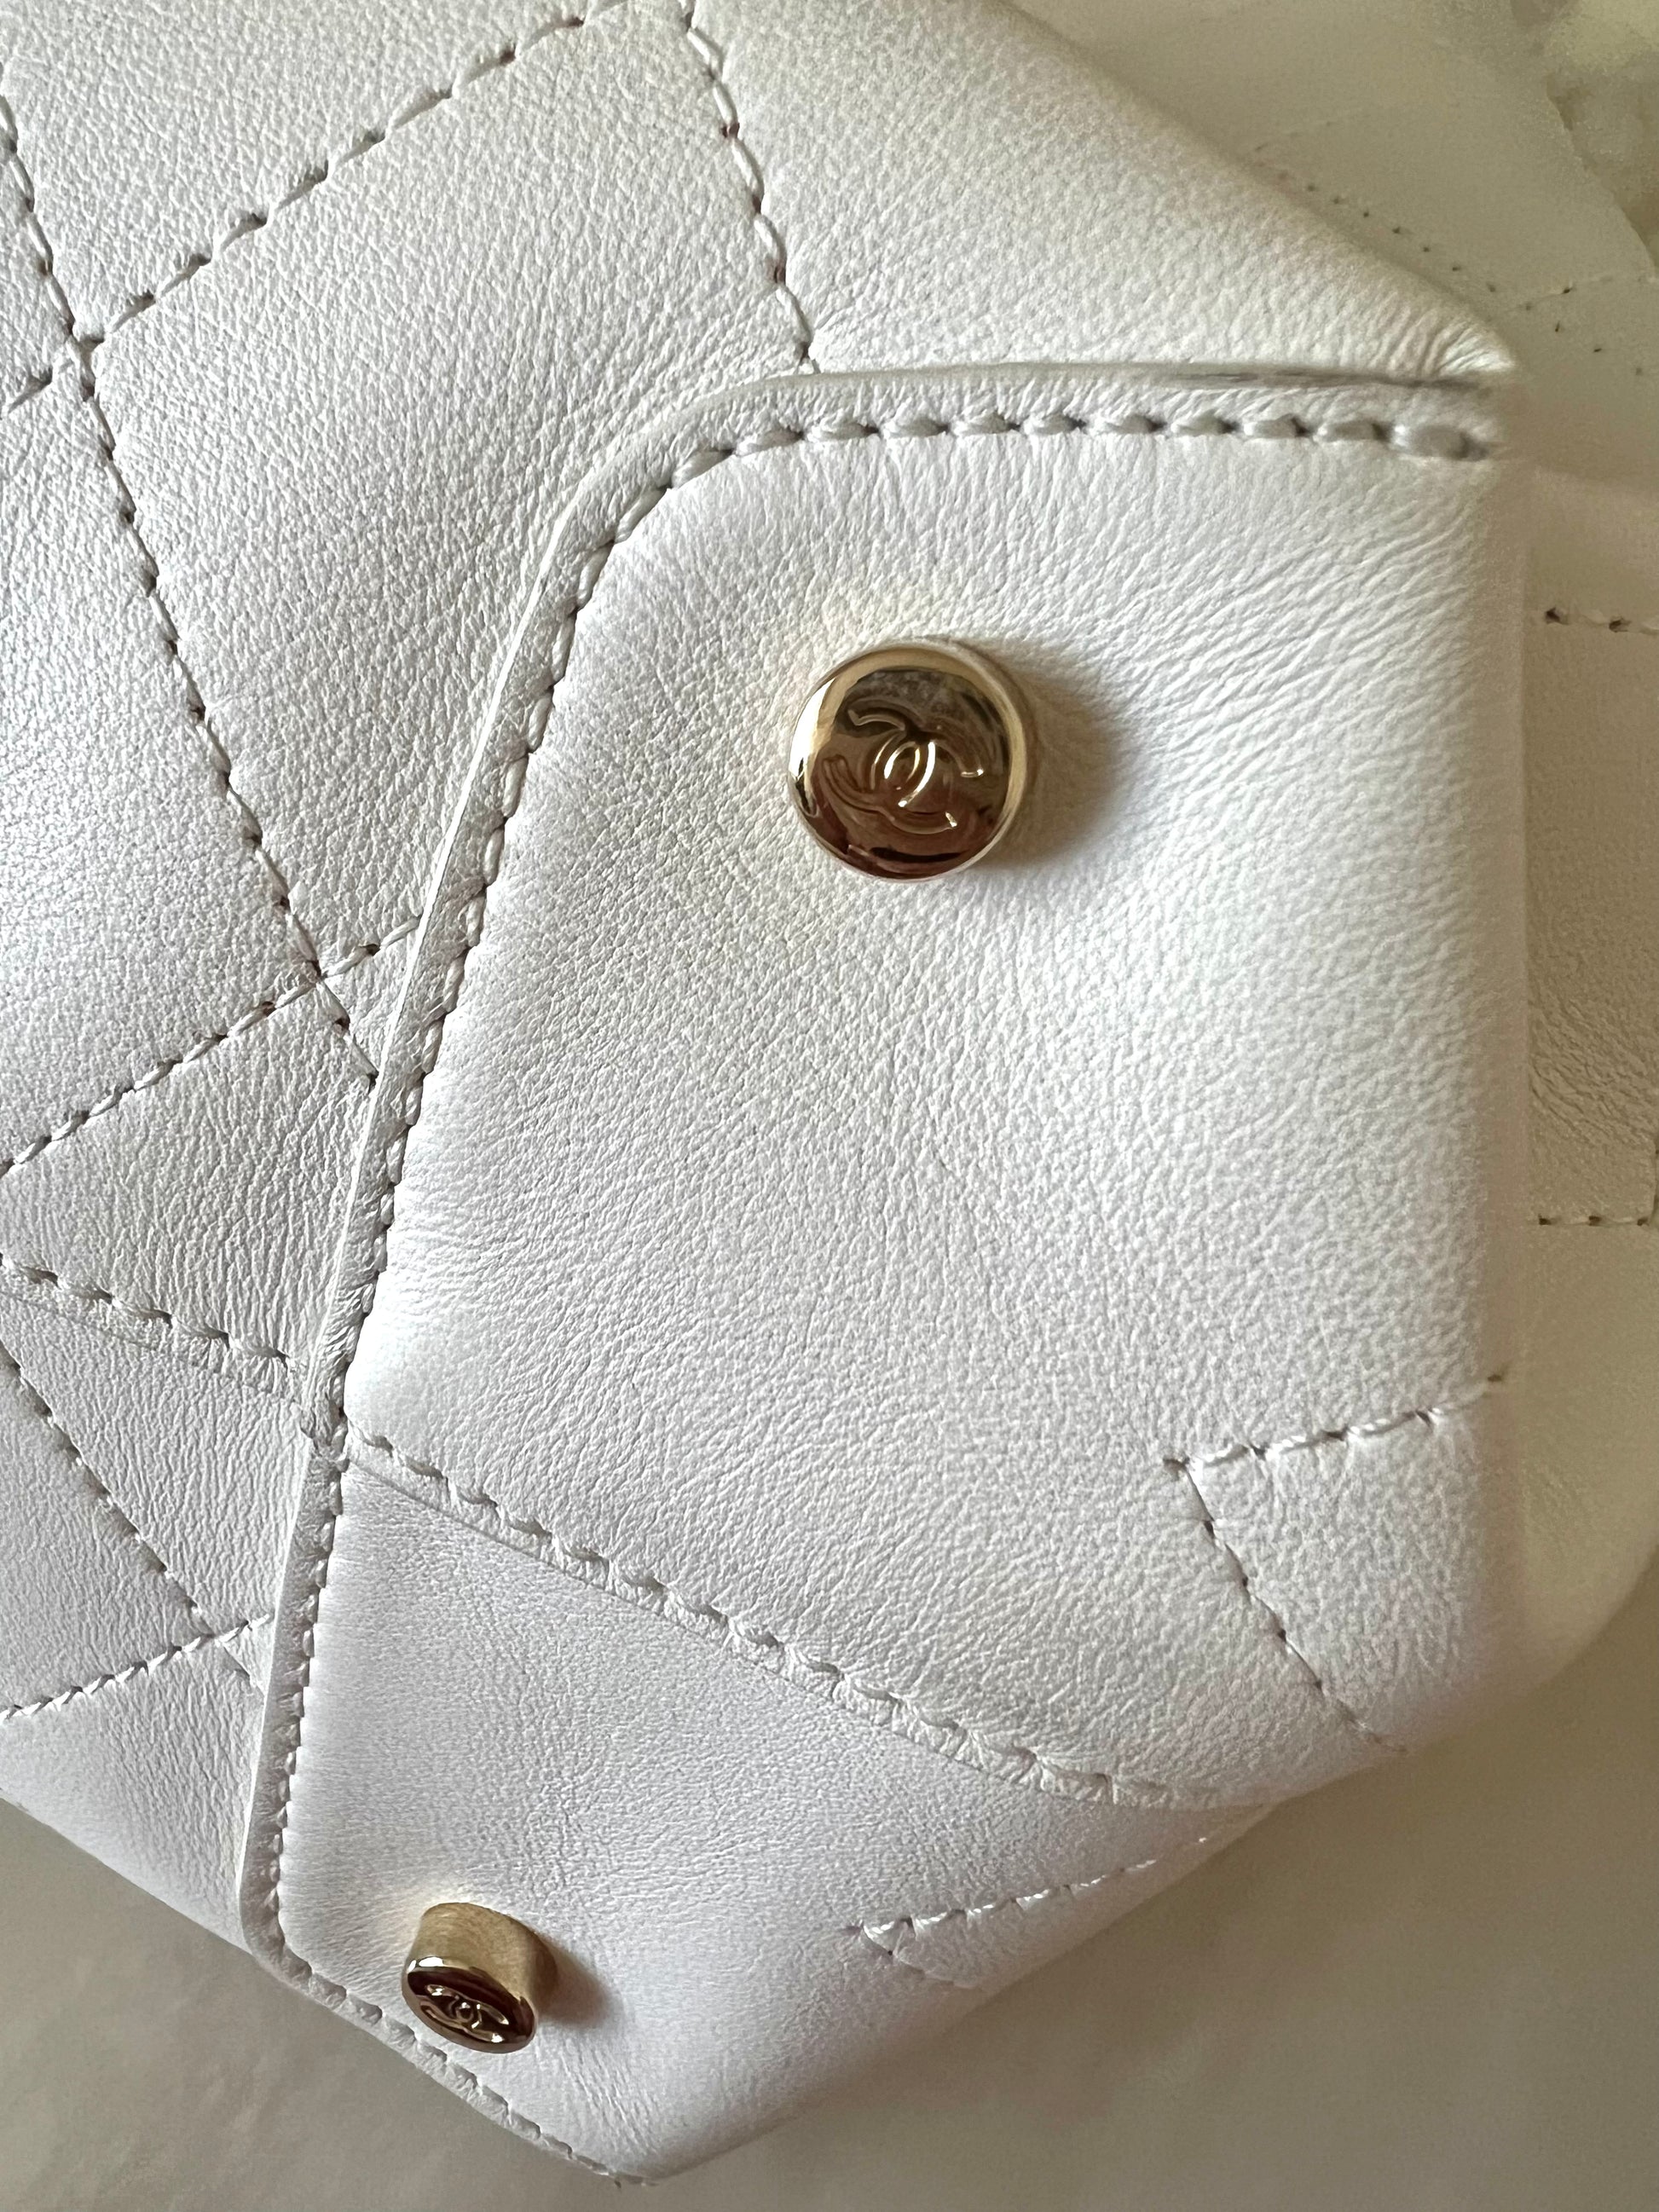 Chanel 20S Cream White Caviar Small Classic Double Flap Bag GHW